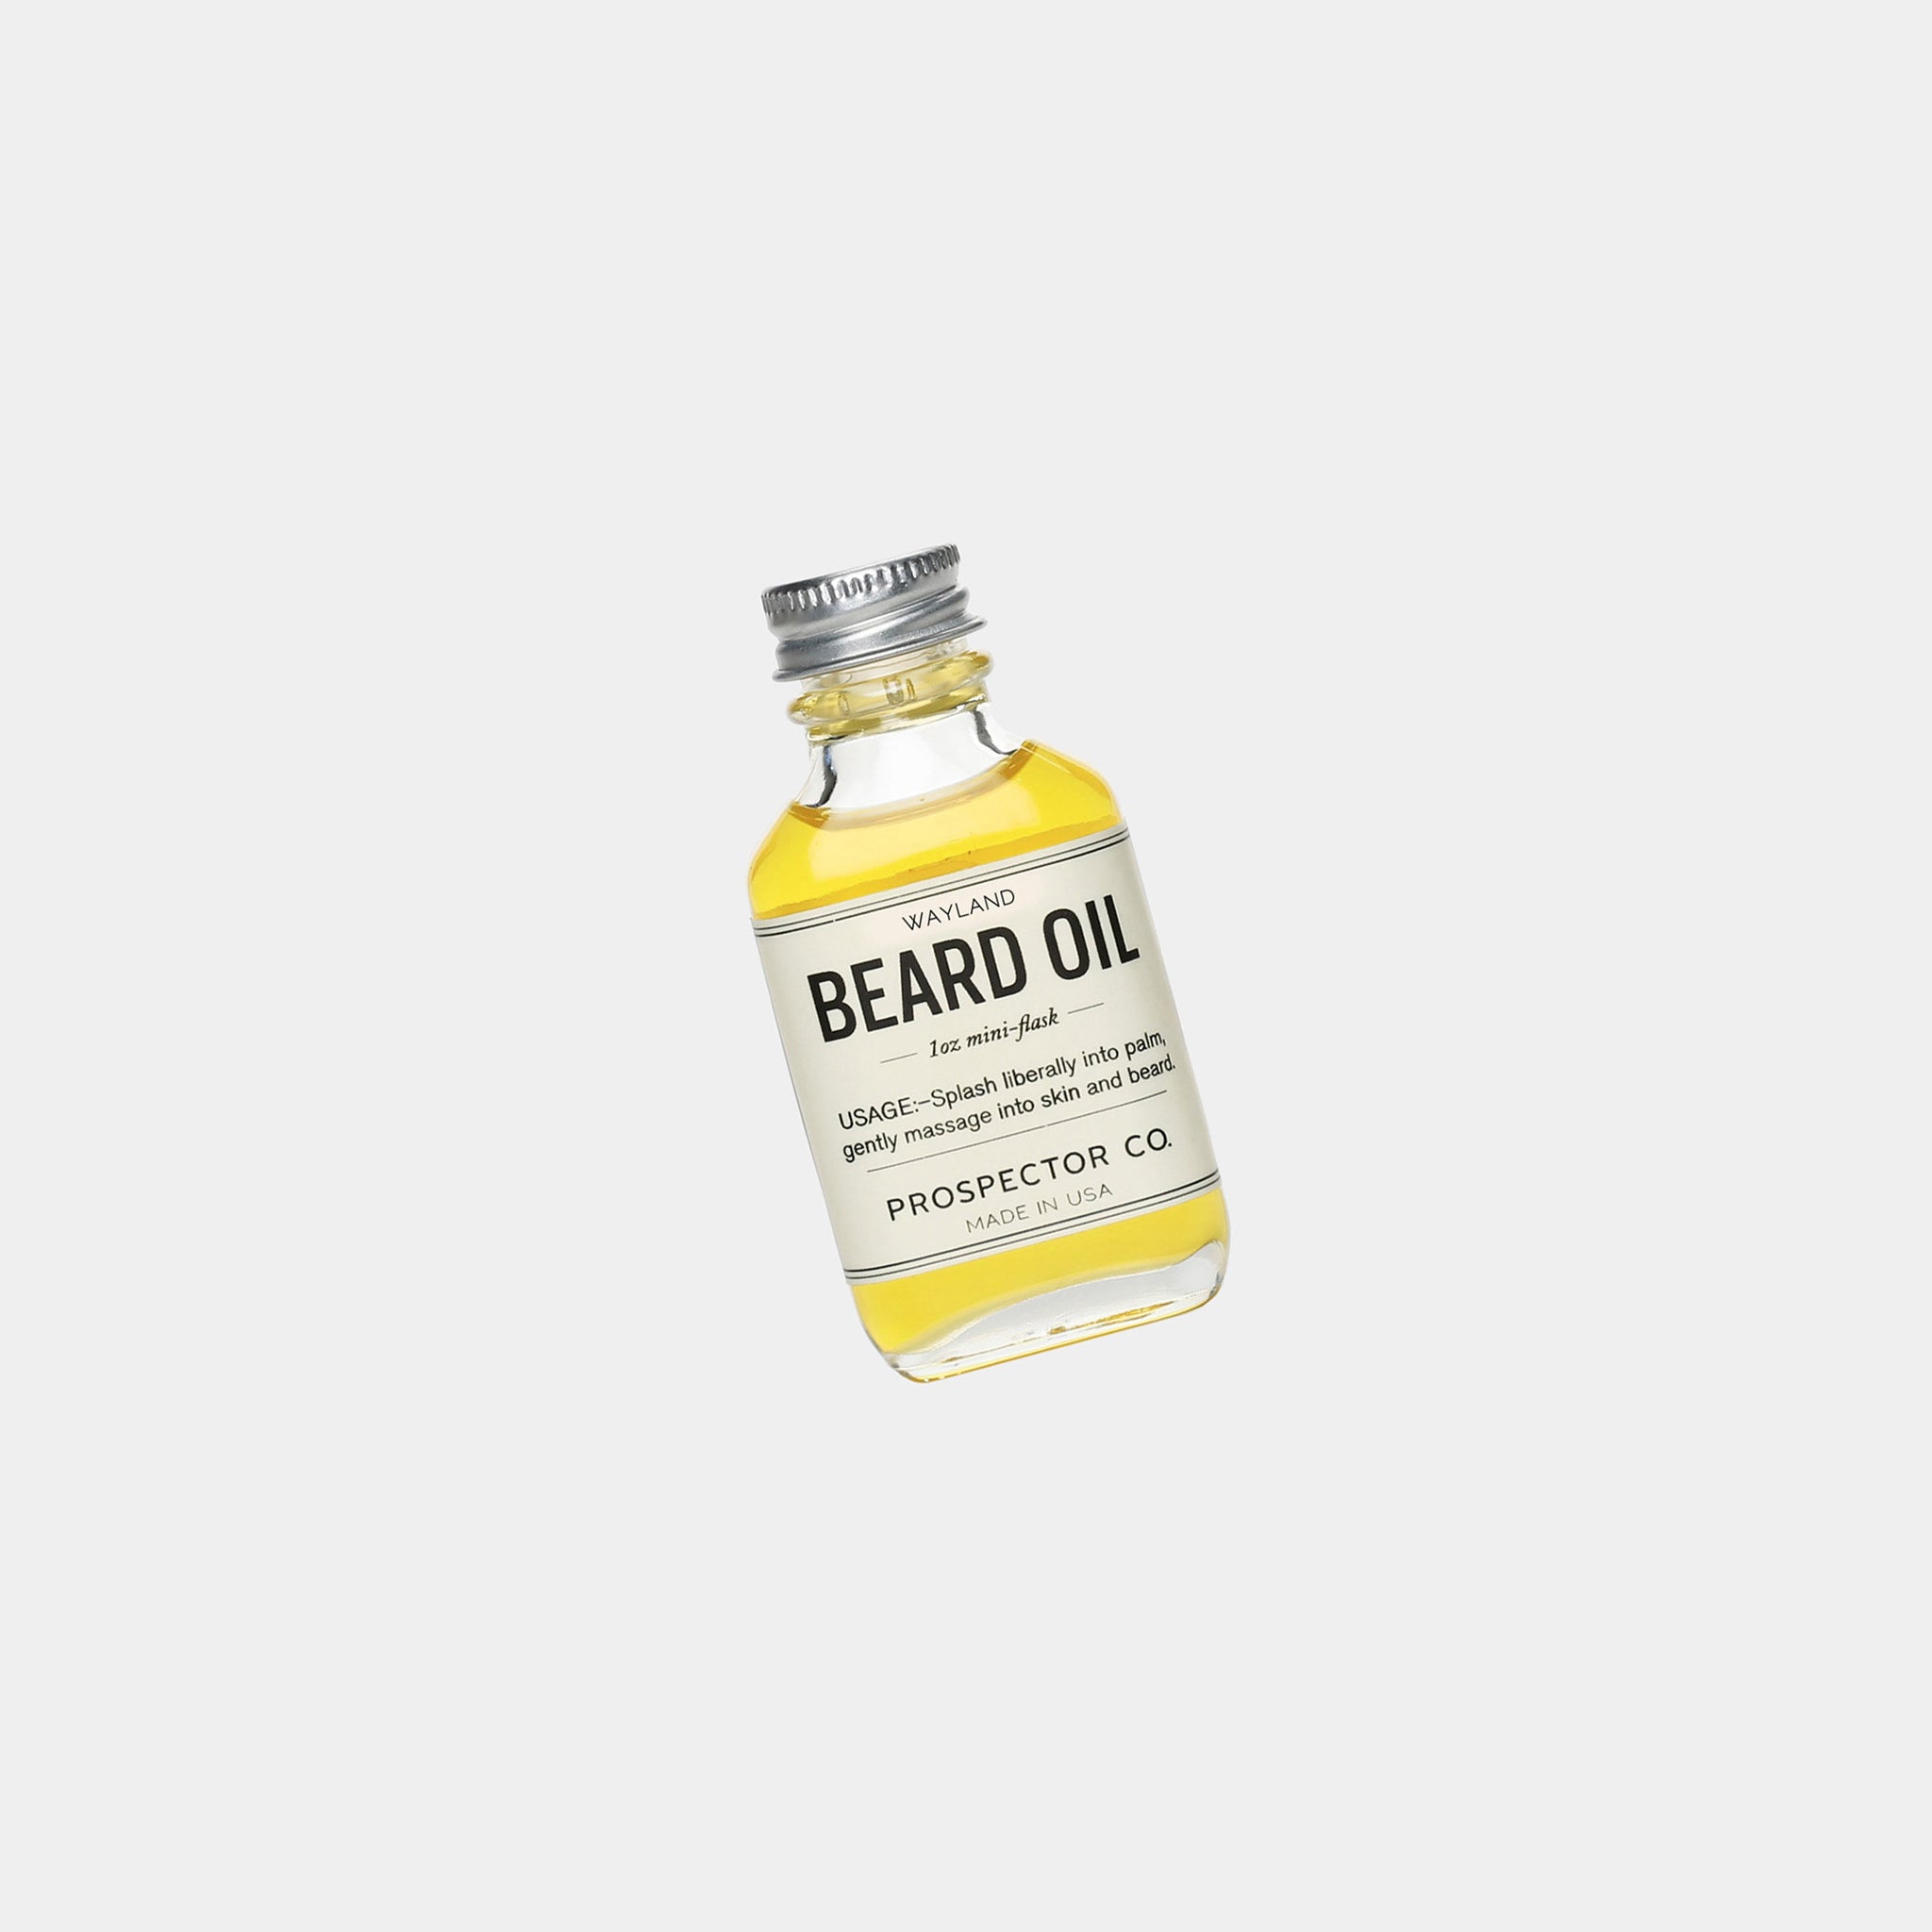 Wayland Beard Oil